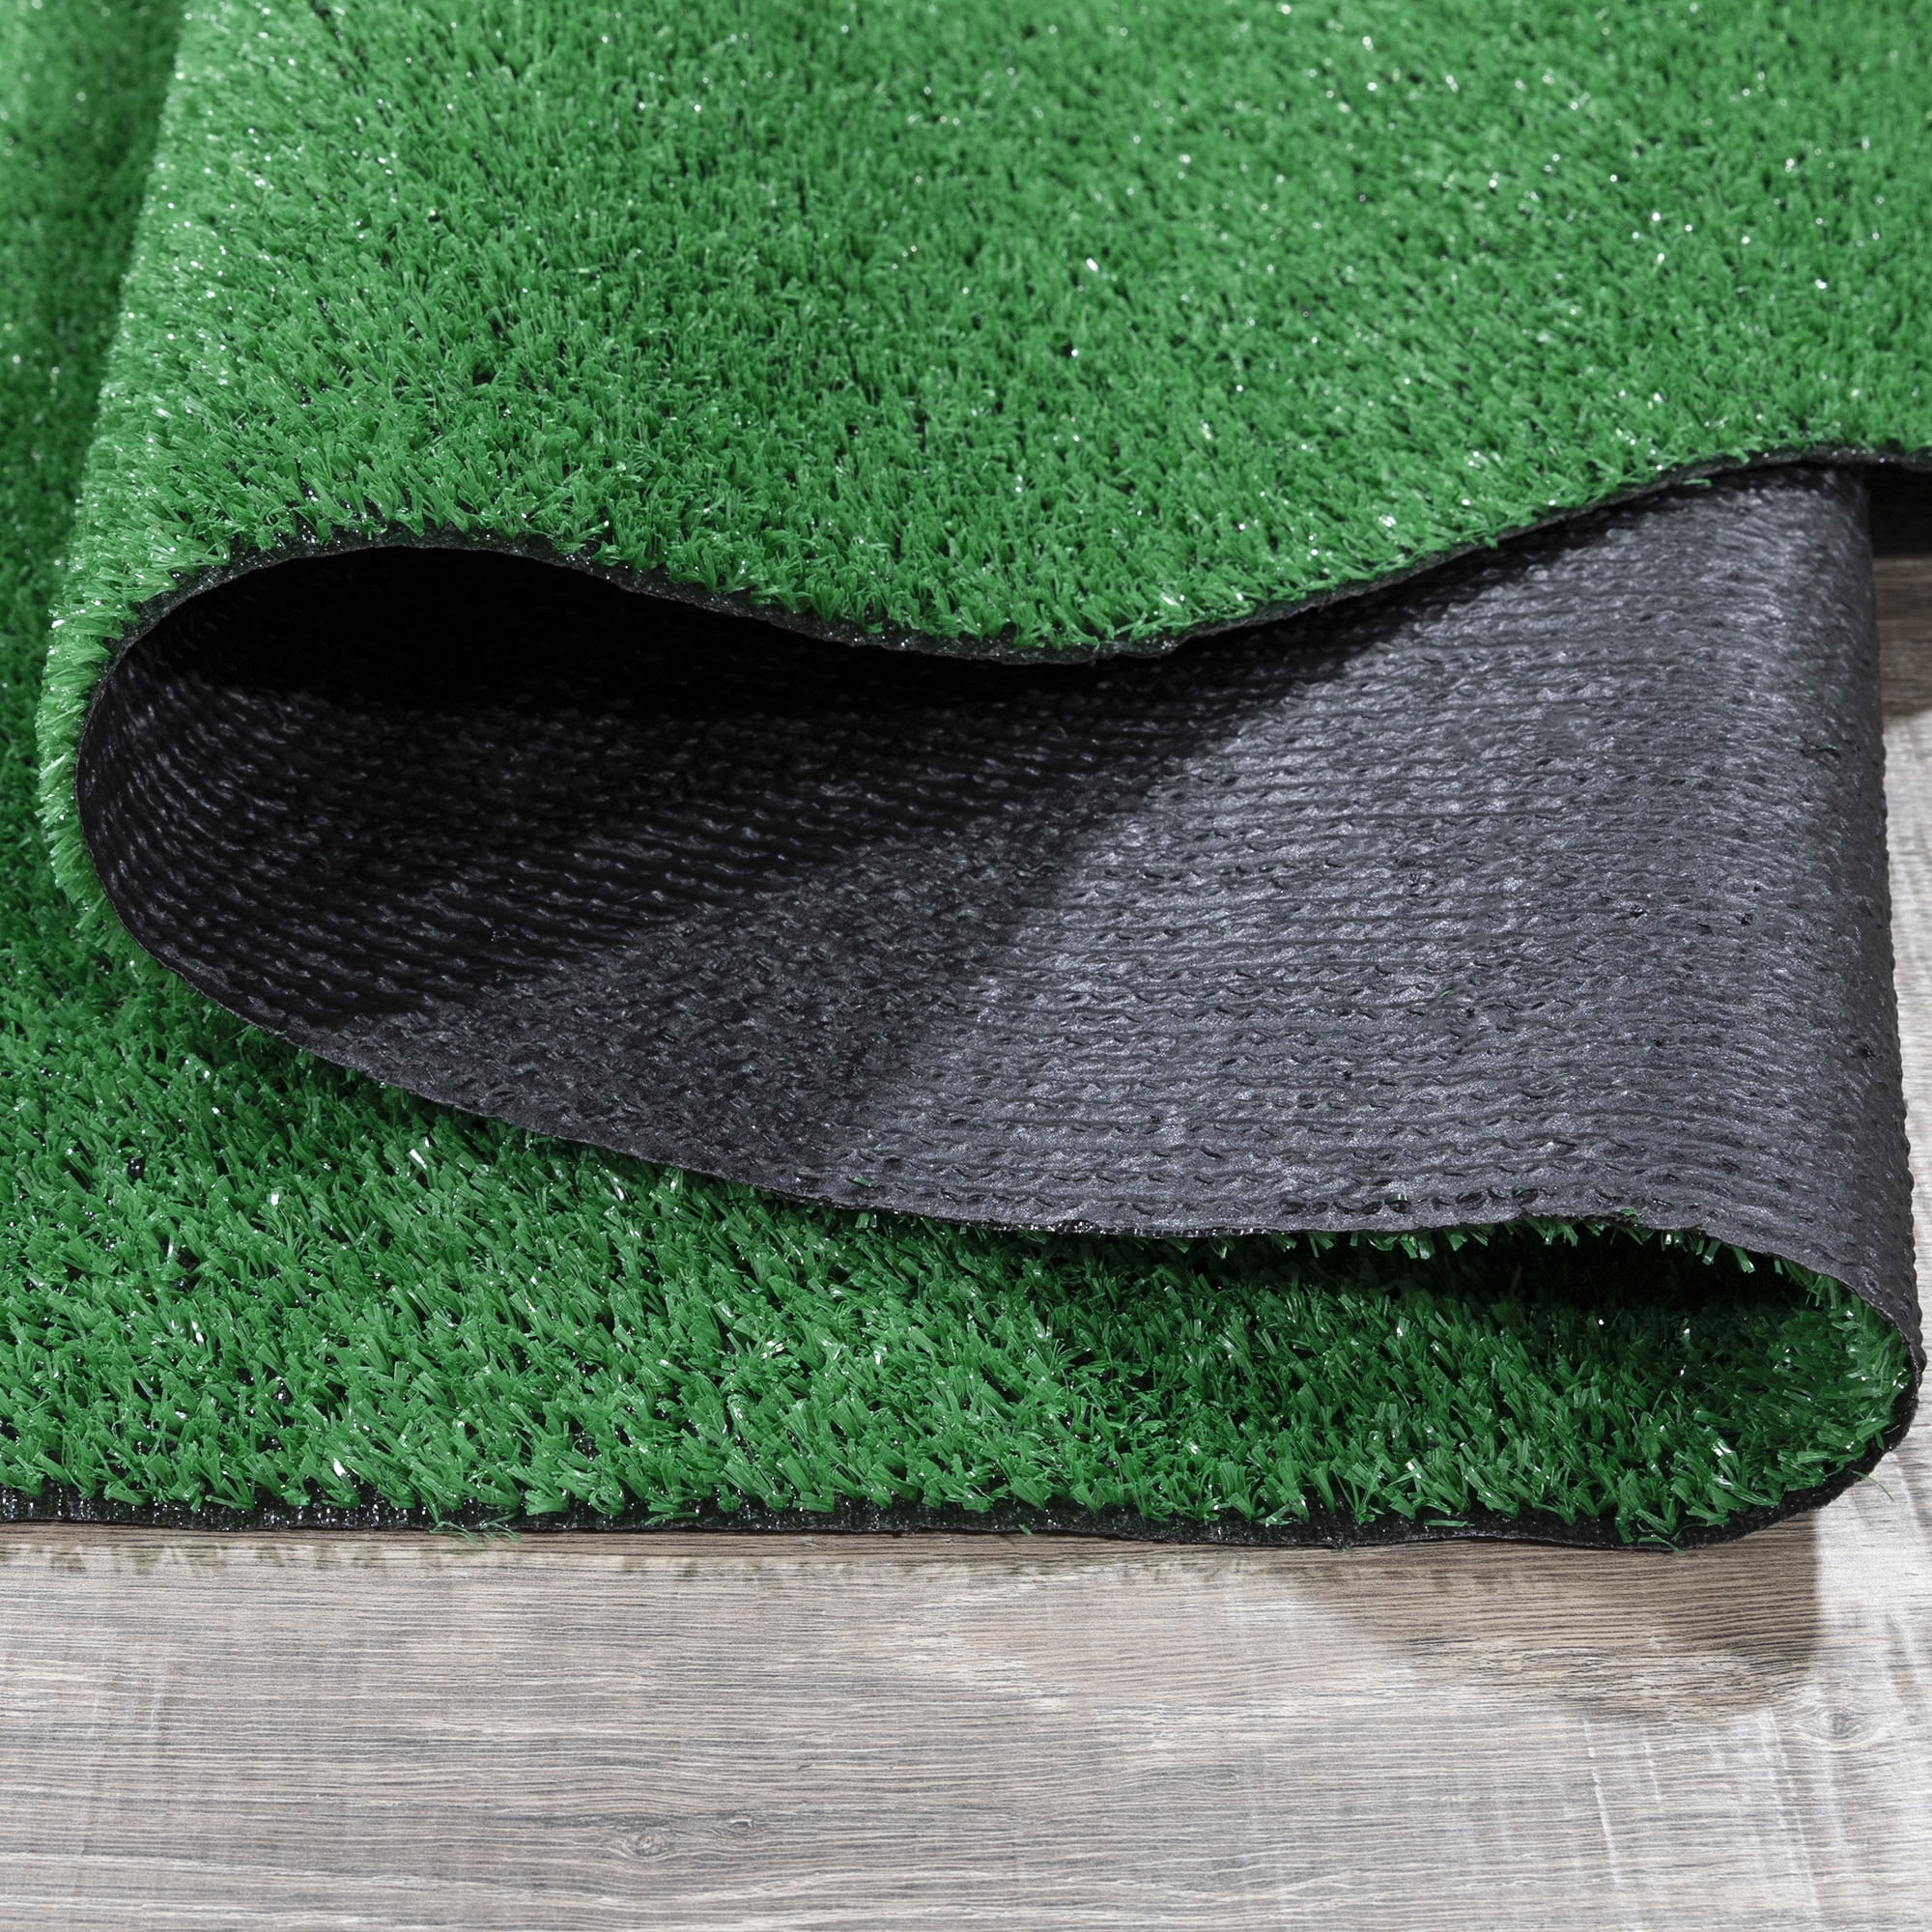 Cheap Wiper Turf Garden Quality durable Artificial Lawn "HAVANA" Green Grass 